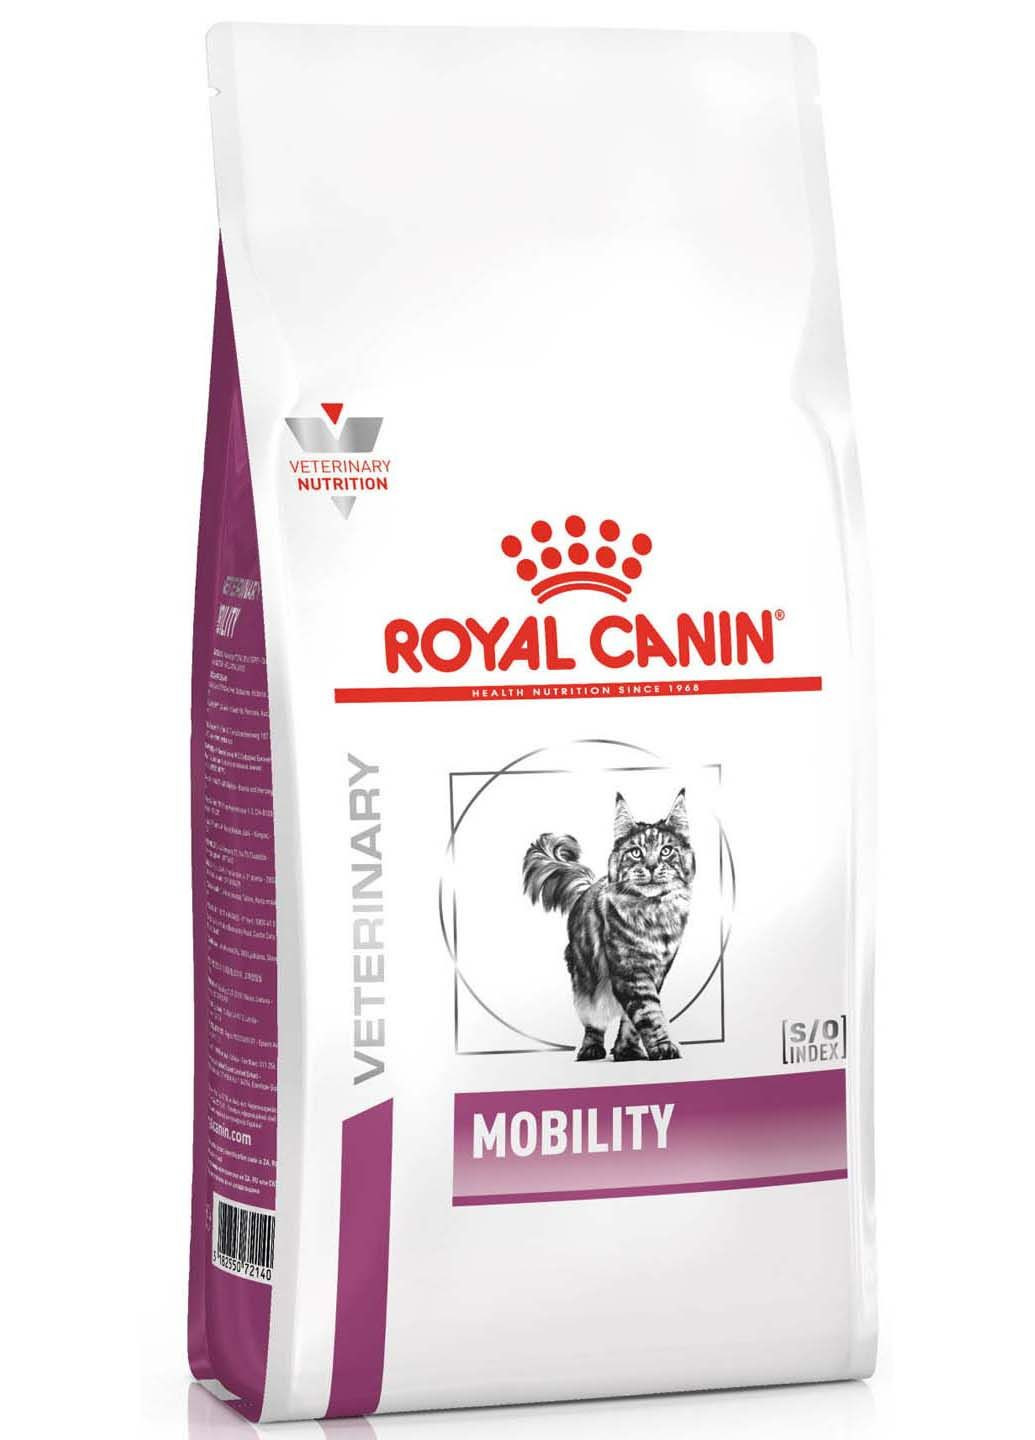 Сухий Корм MOBILITY FELINE 2 кг Royal Canin (286472691)